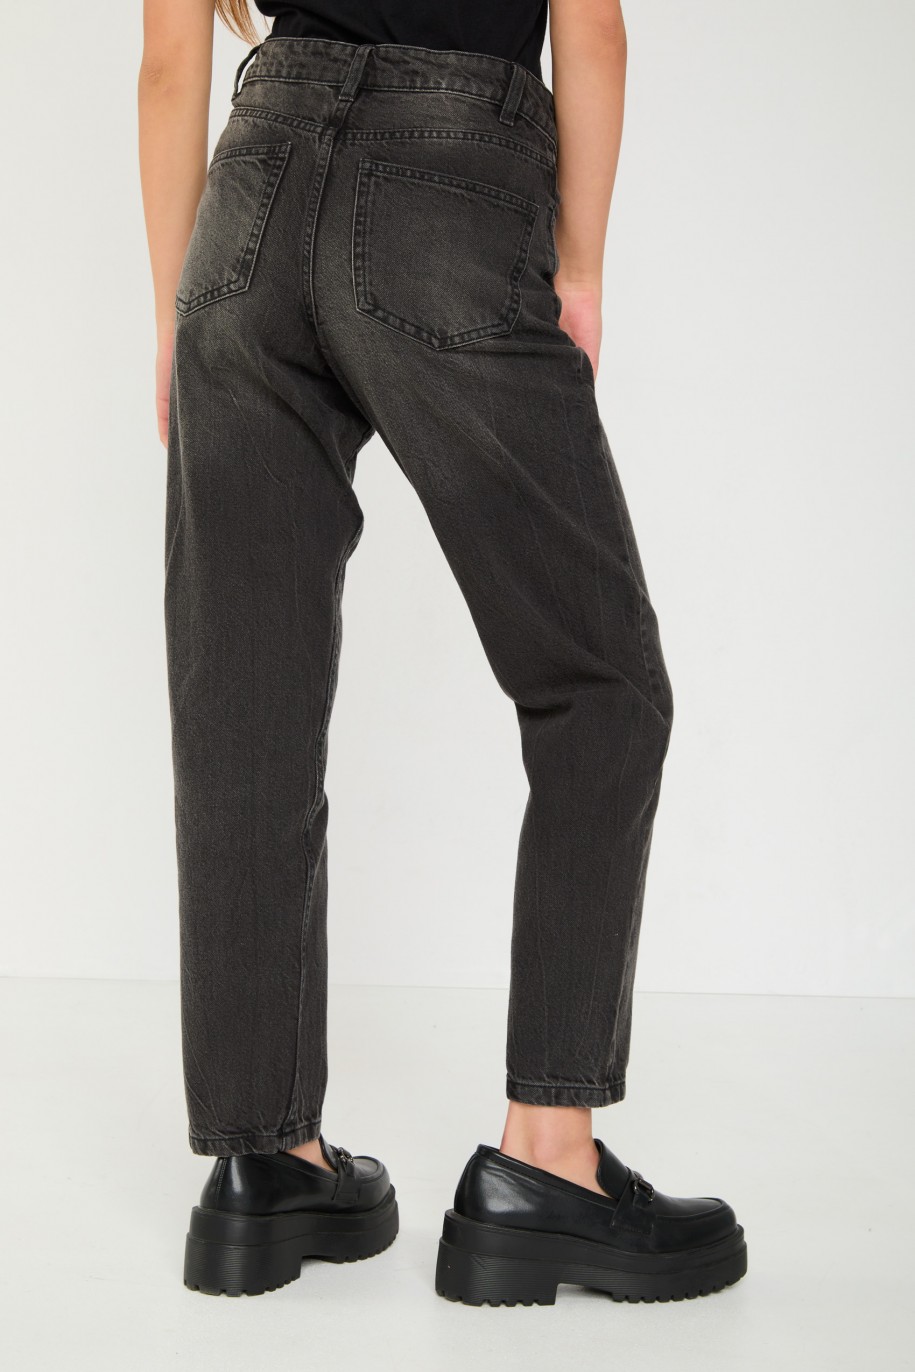 Szare jeansy typu MOM FIT - 43968